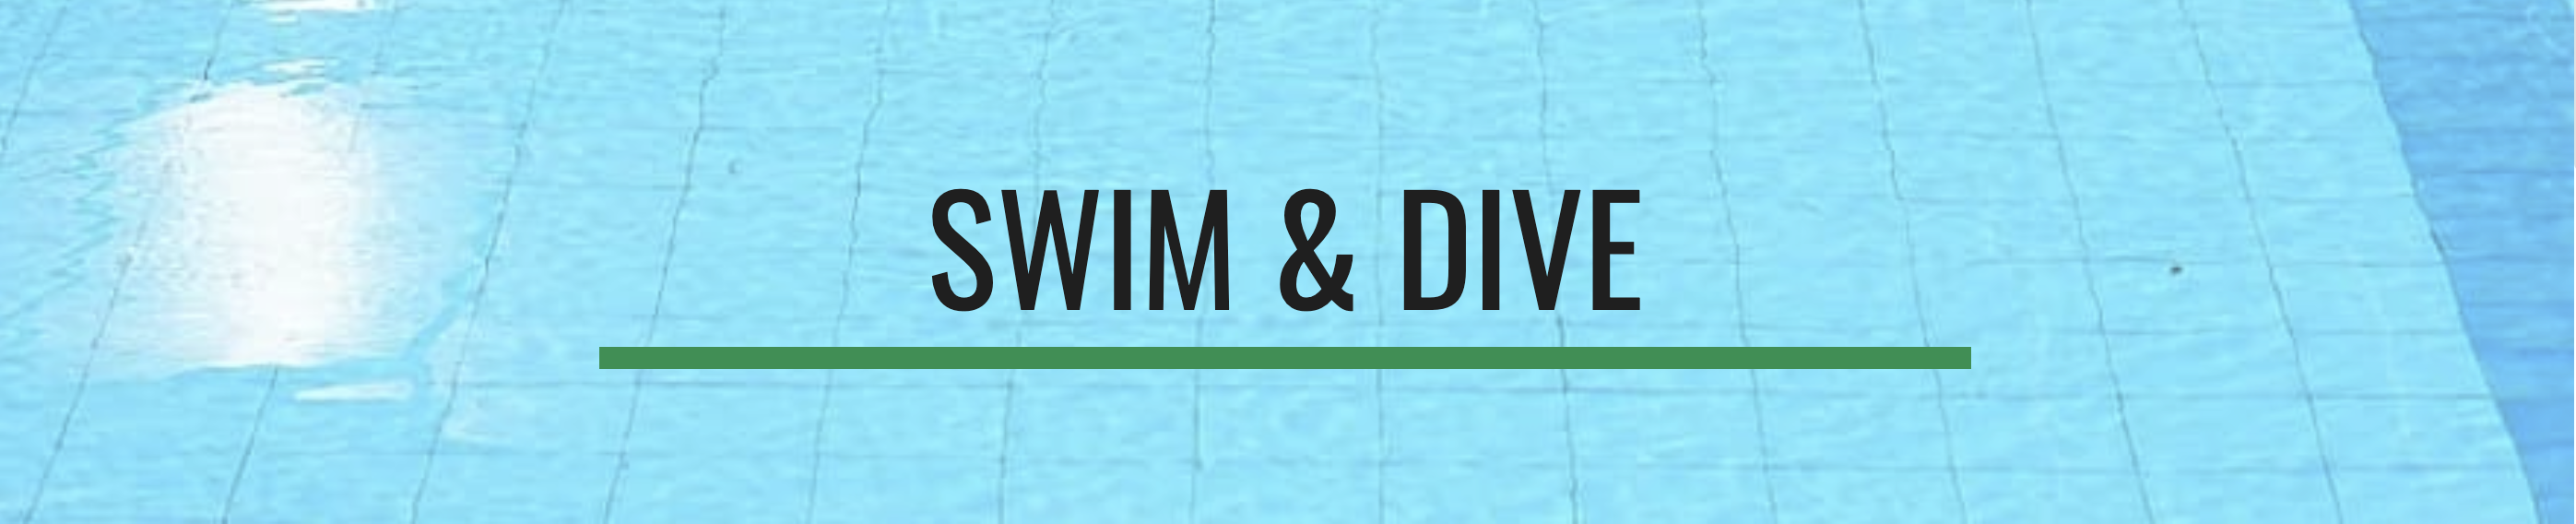 swim & dive